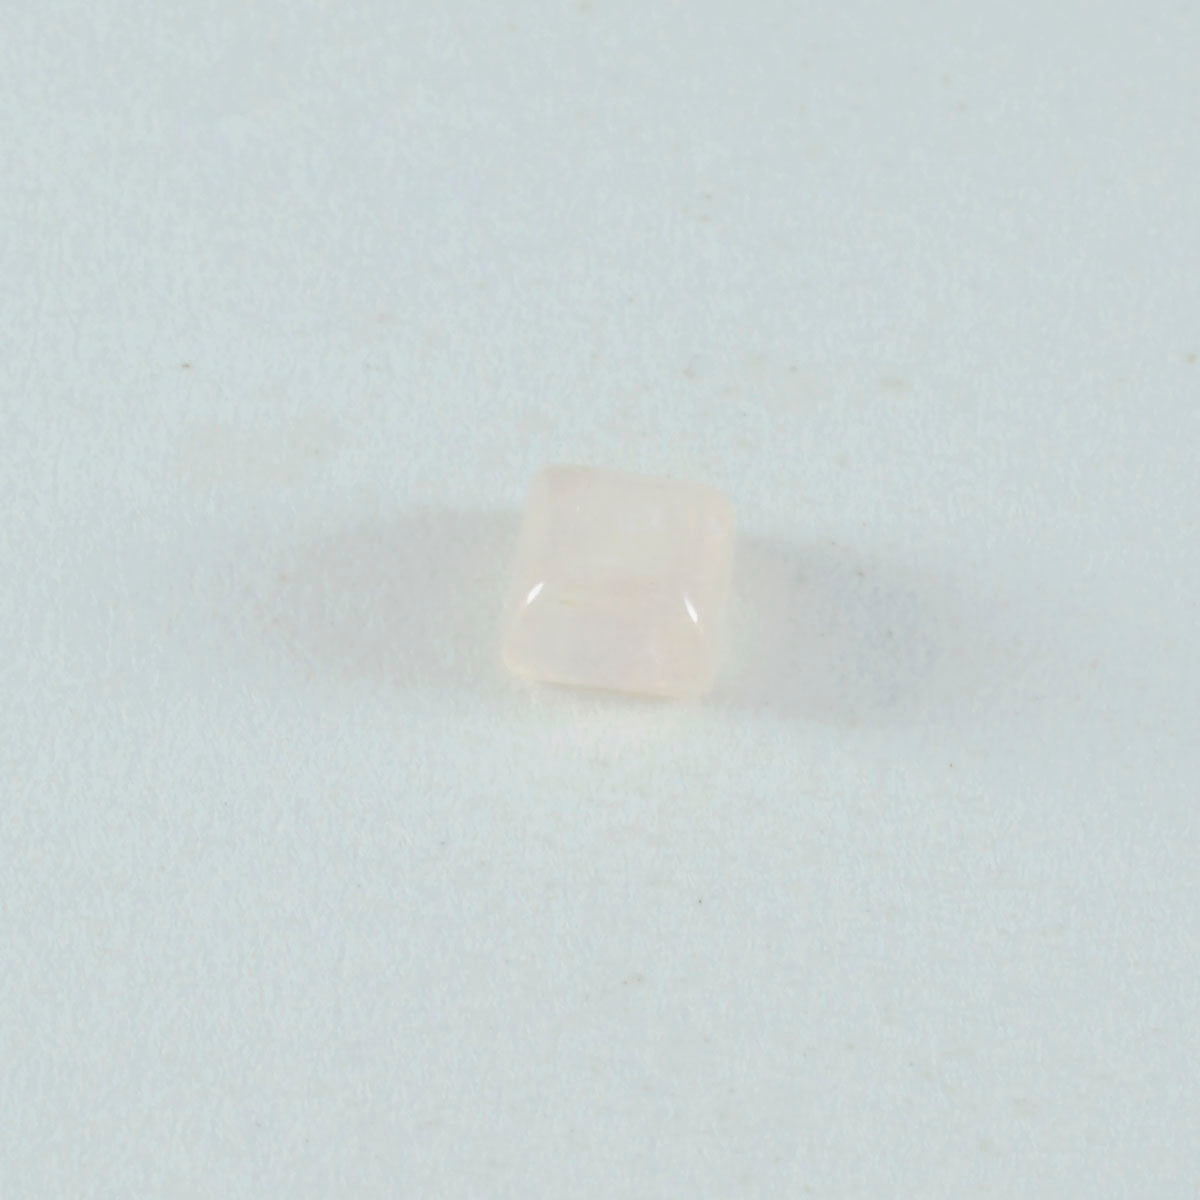 Riyogems 1PC Pink Rose Quartz Cabochon 9x9 mm Square Shape fantastic Quality Loose Gem